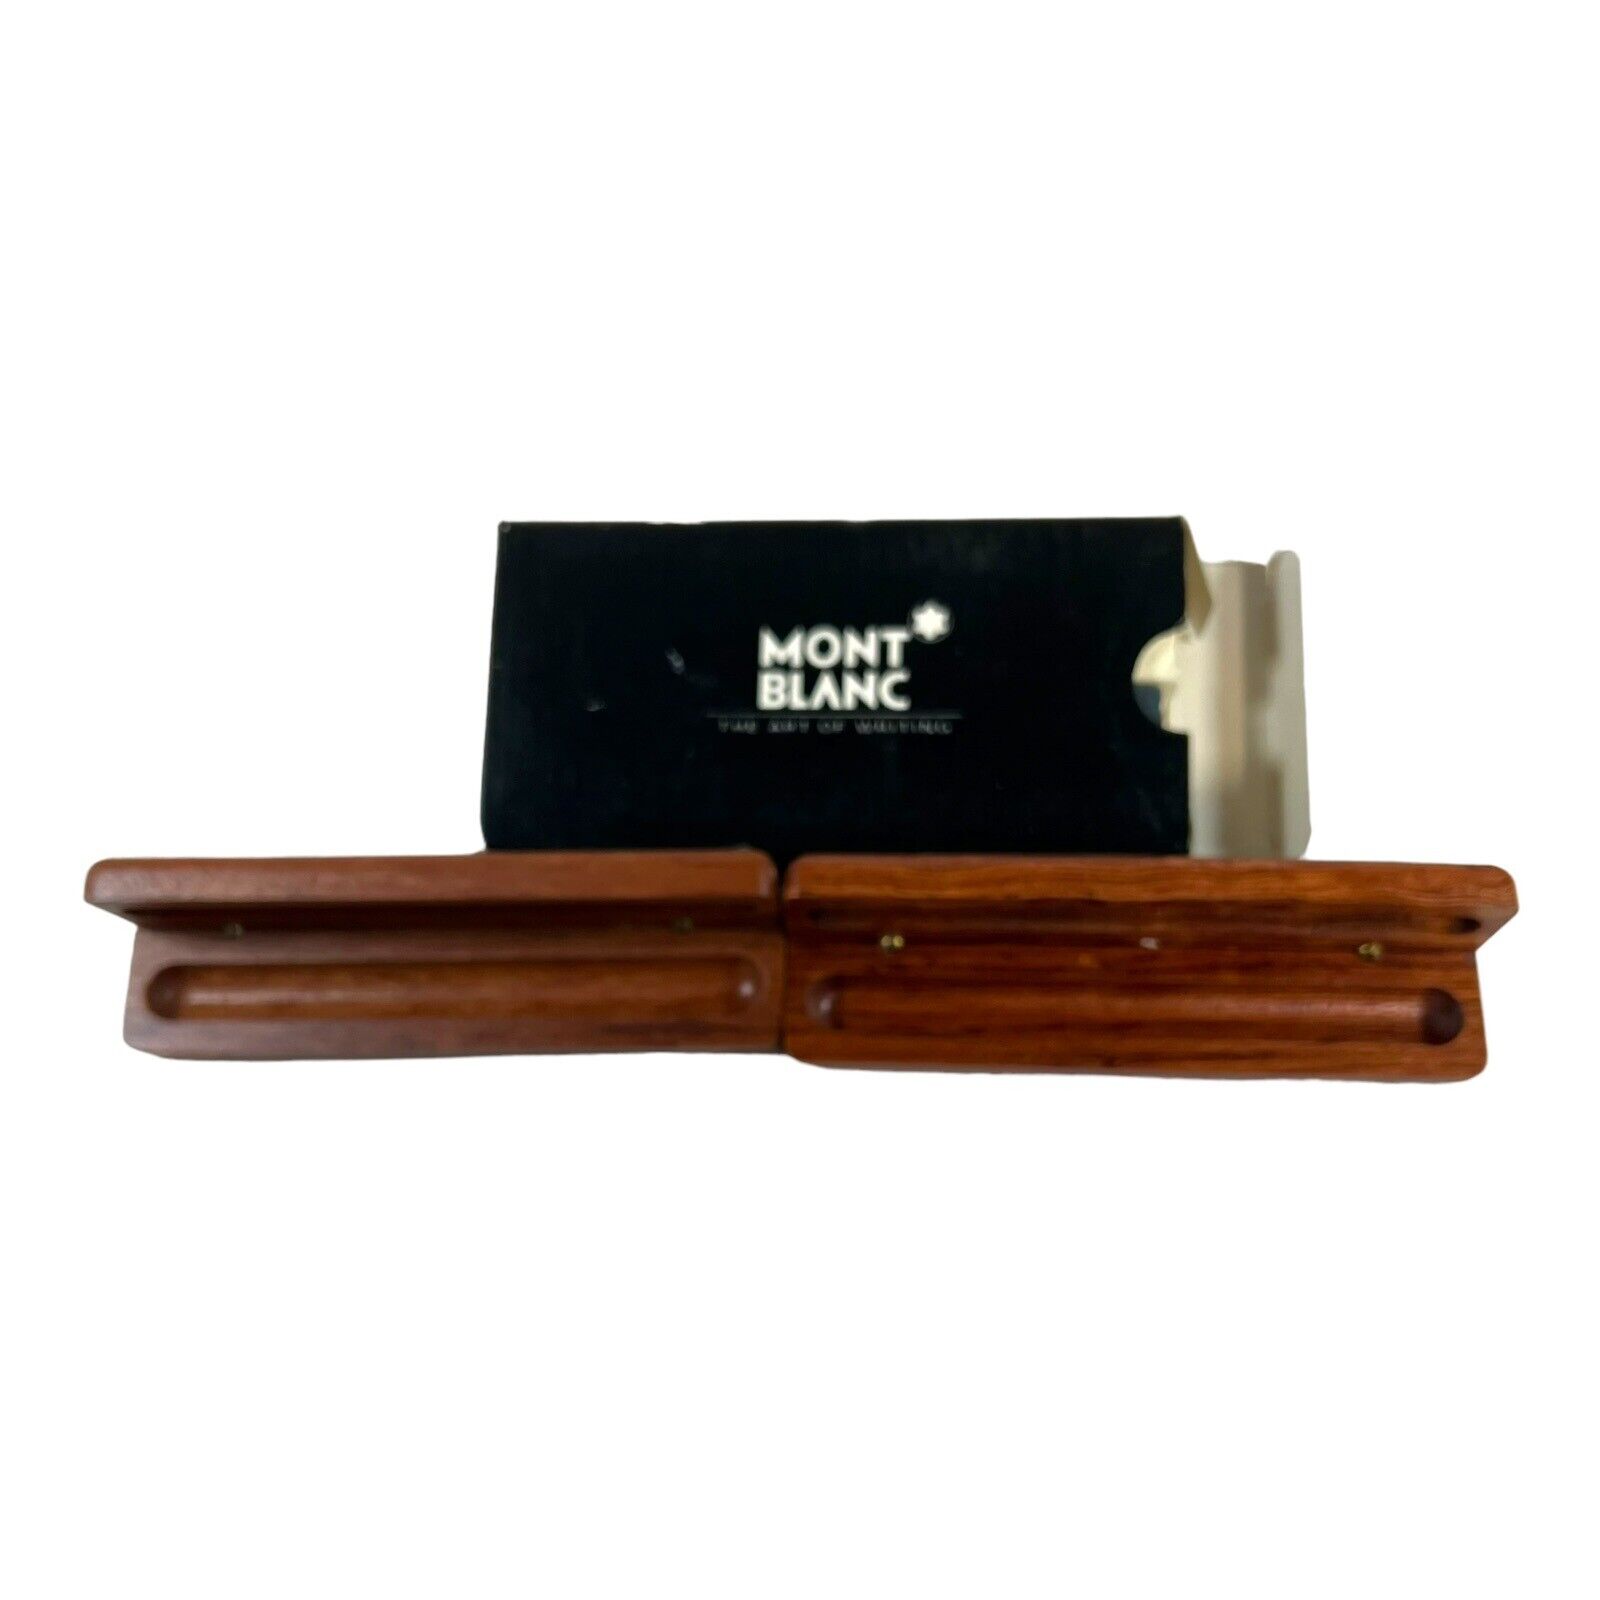 MONT BLANC EMPTY Wood  Pen Pencil Retro 1951 Case Wood Gift Box Original Set